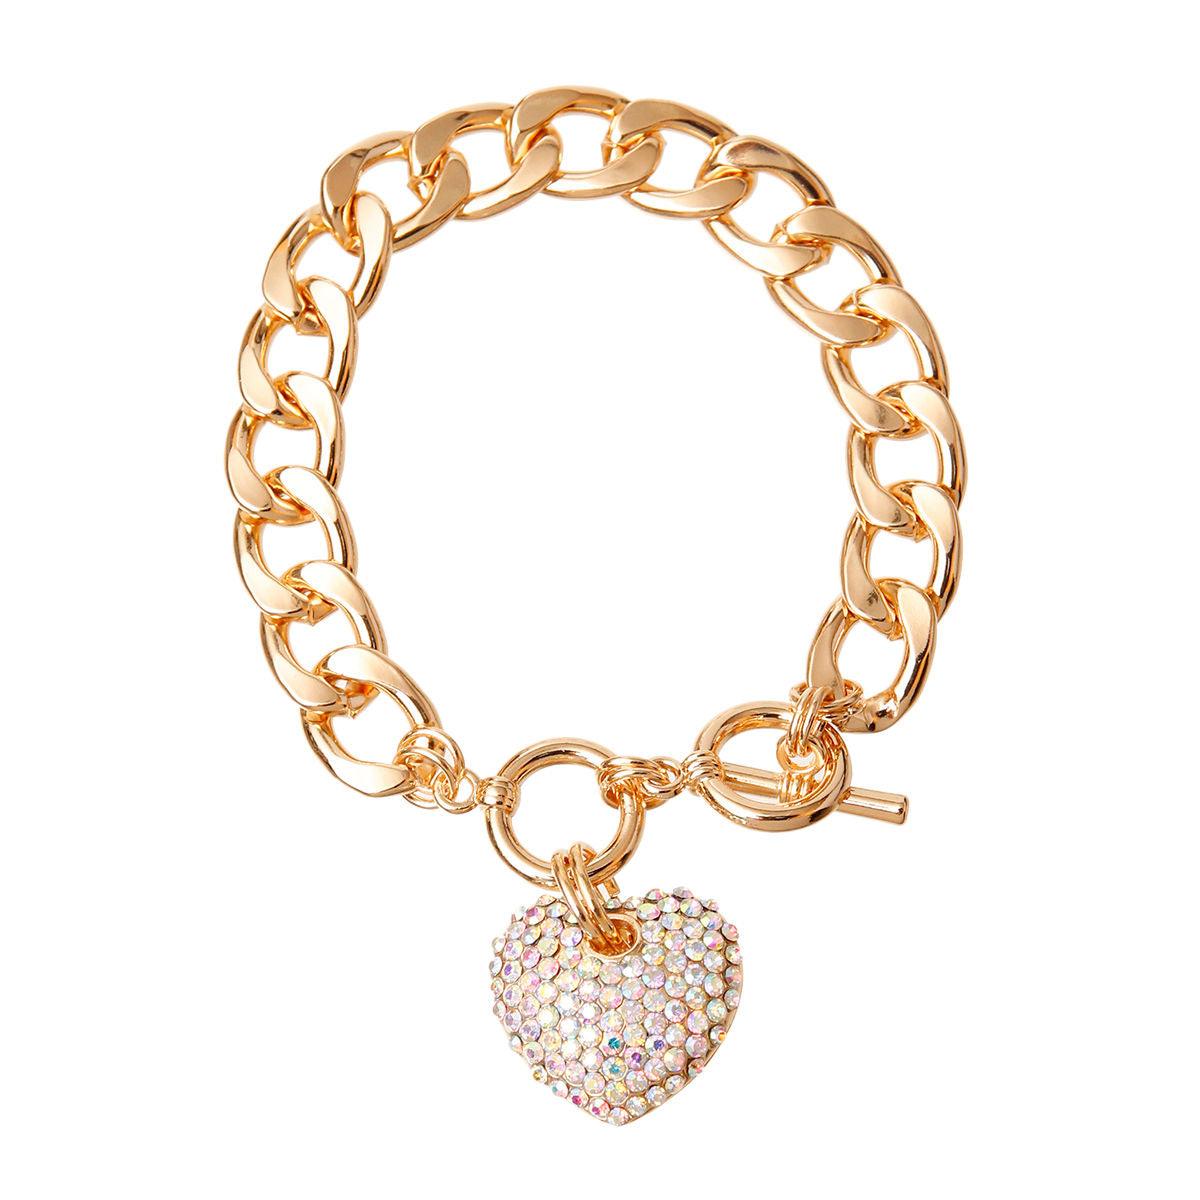 Gold Plated Link Chain Bracelet Aurora Borealis Heart Charm